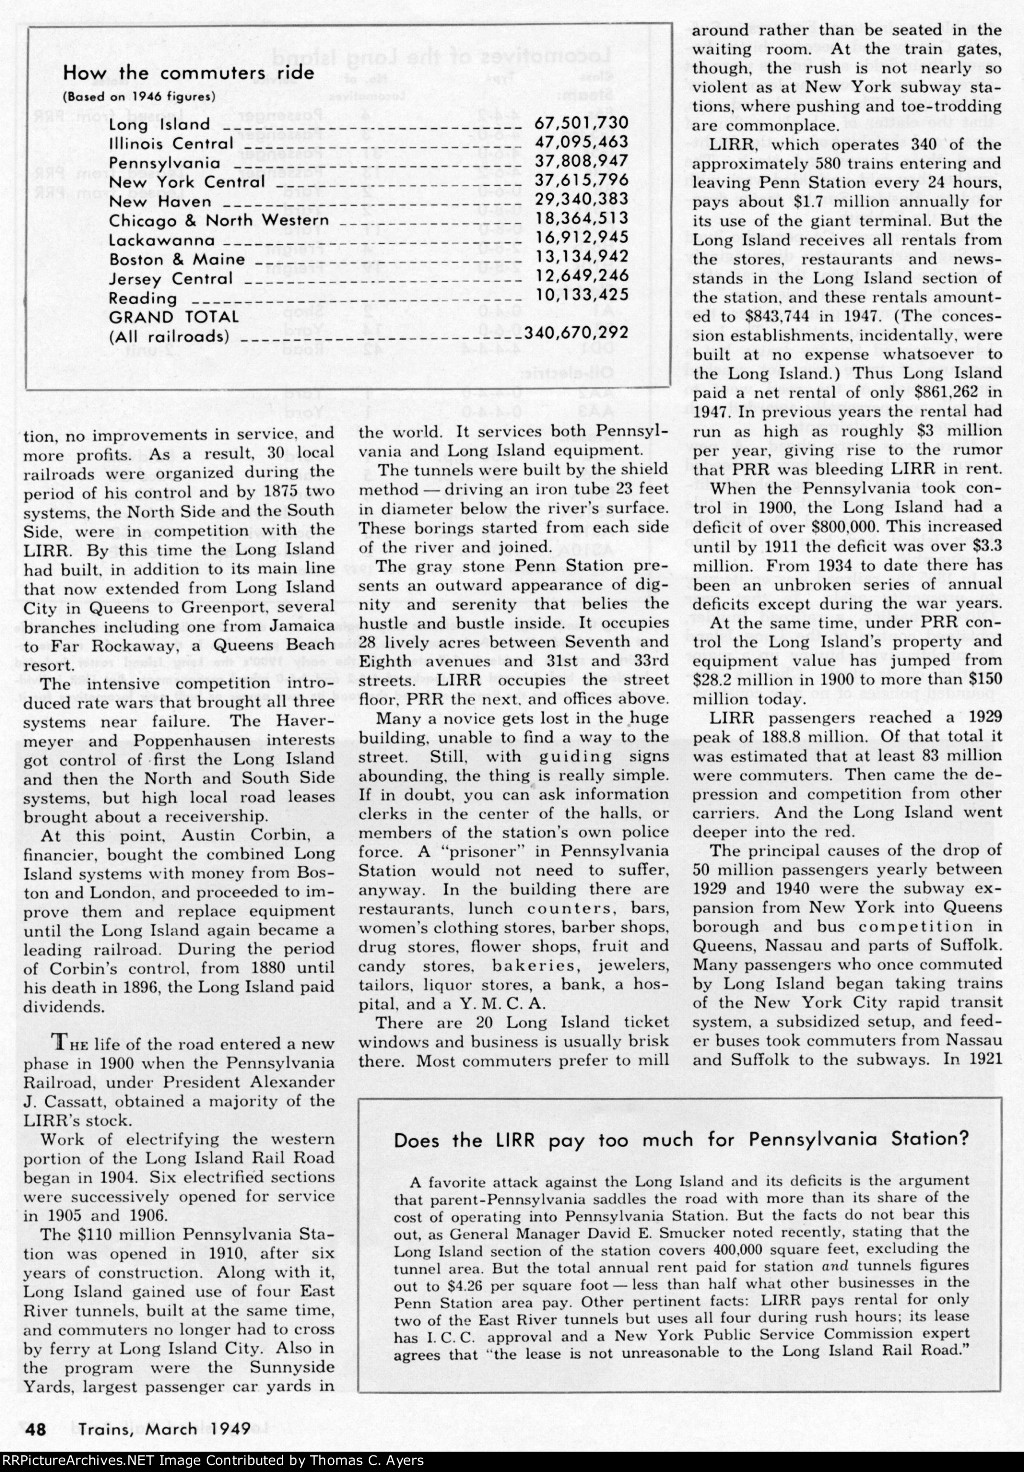 "Long Island Rail Road," Page 48, 1949